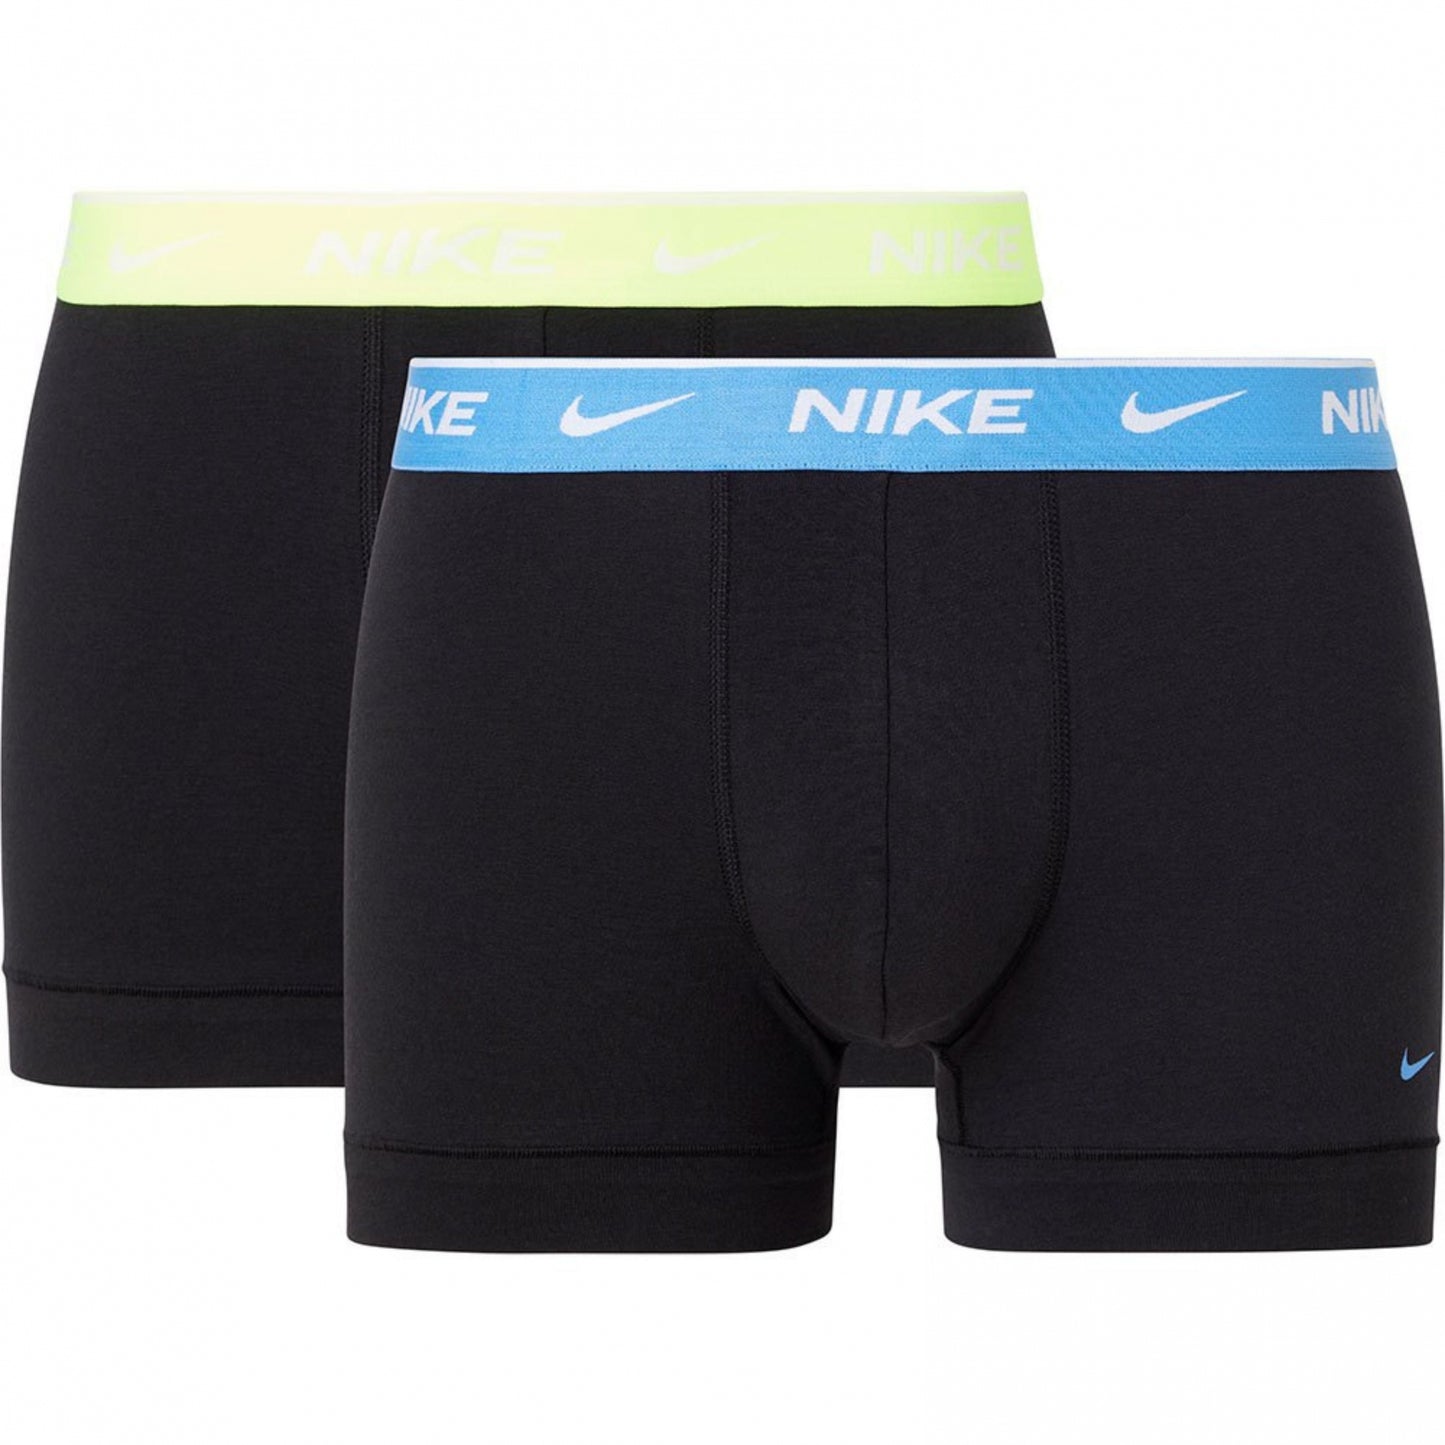 Boxer pant Nike Trunk Underwear 2 Pack